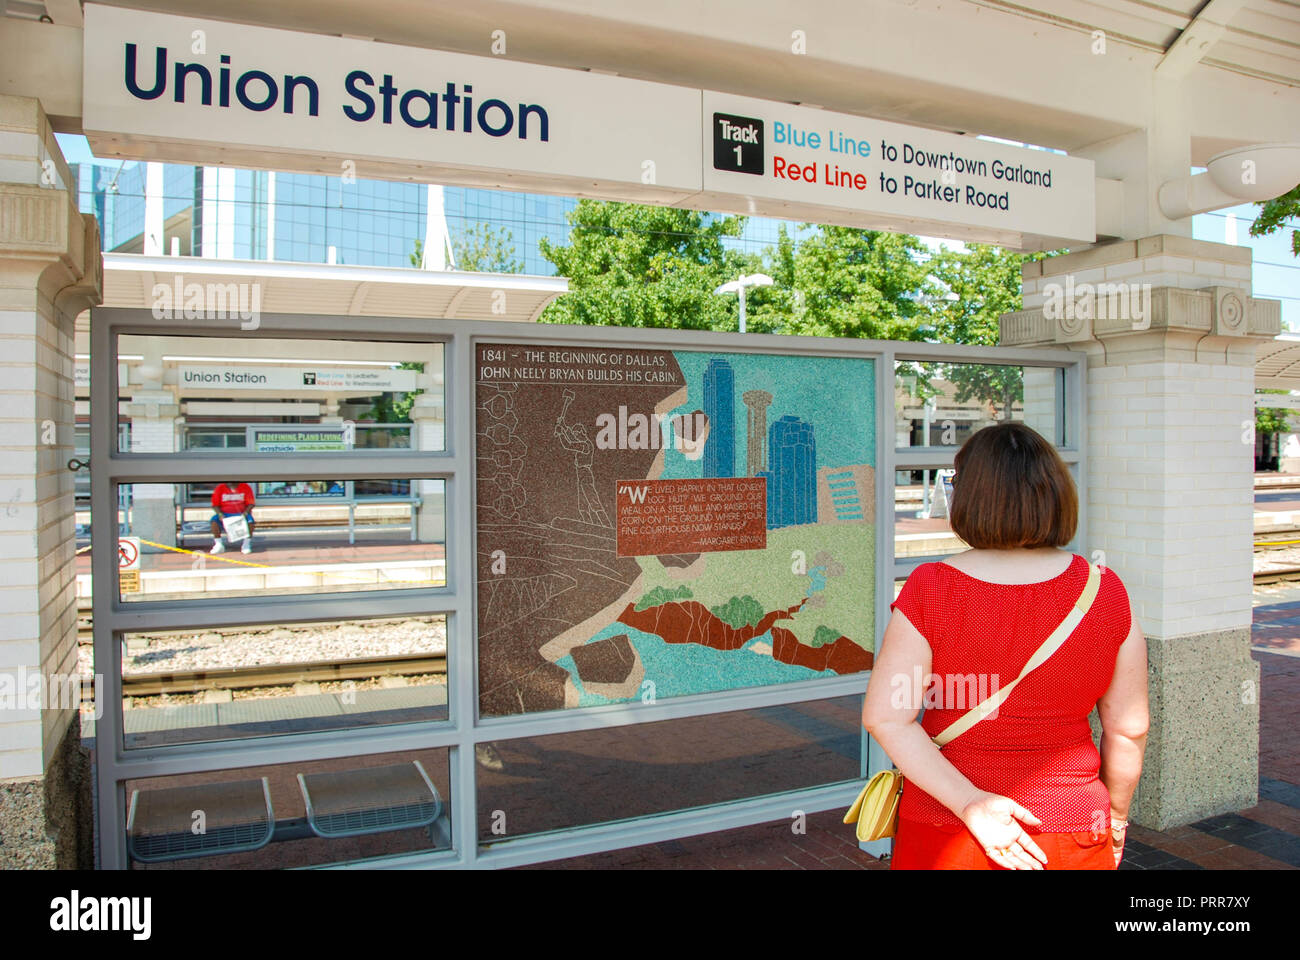 union station subway map